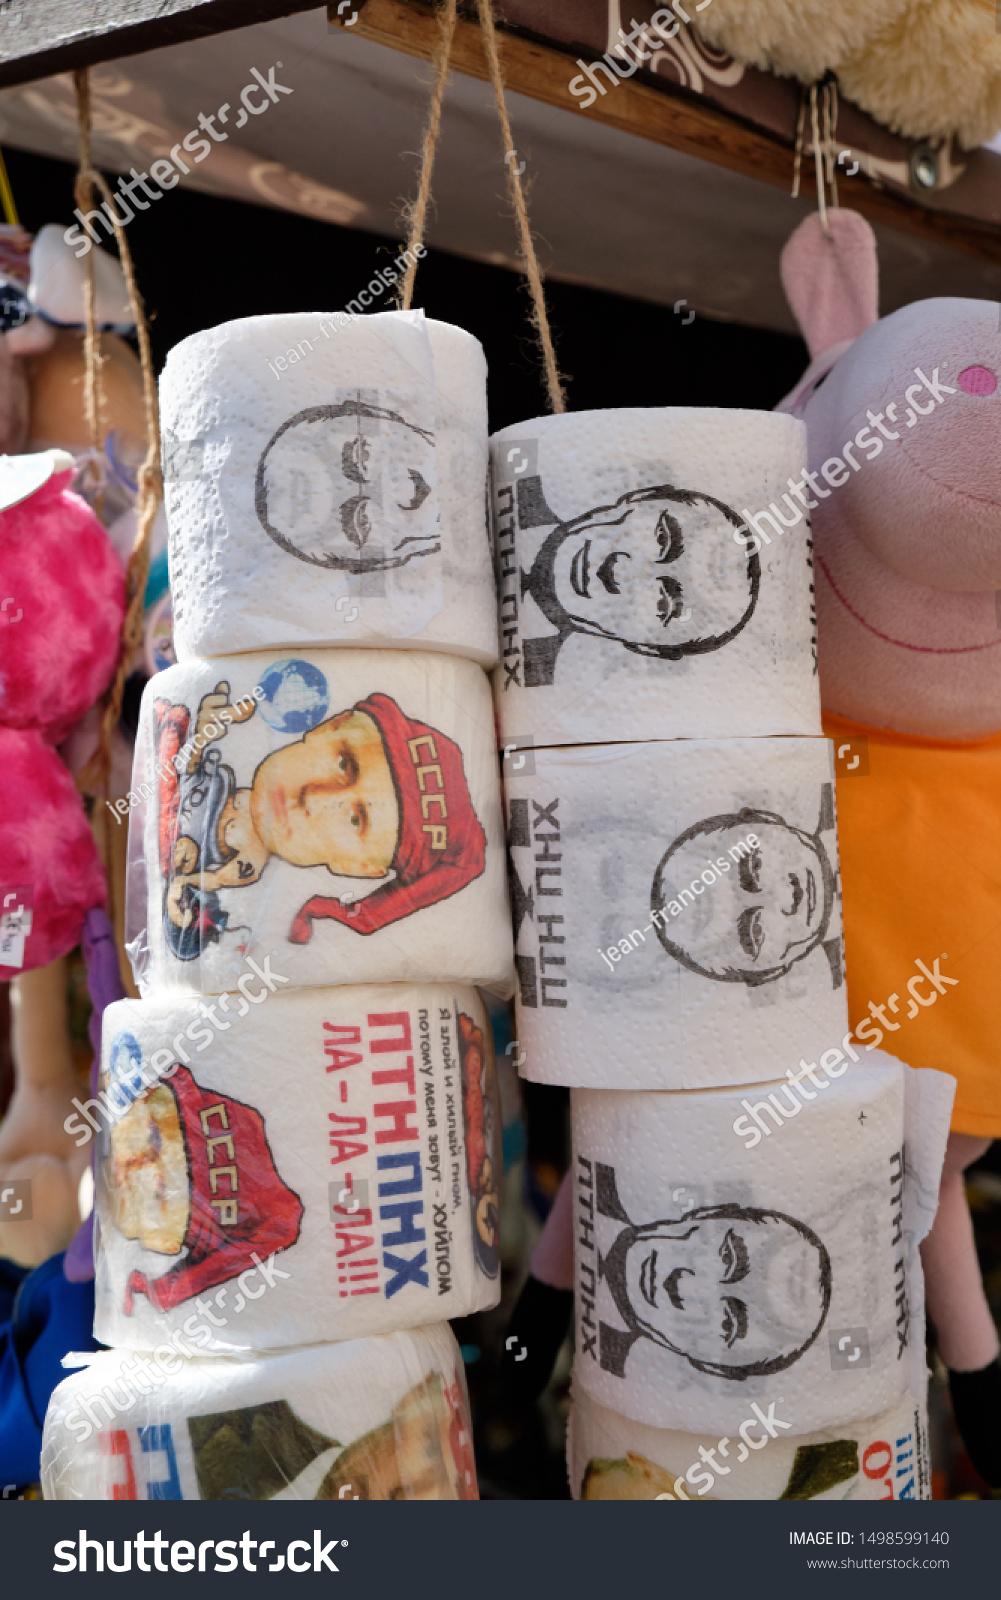 stock-photo-display-of-various-toilet-paper-depicting-vladimir-putin-for-sales-at-market-in-lviv-ukraine-1498599140.jpg